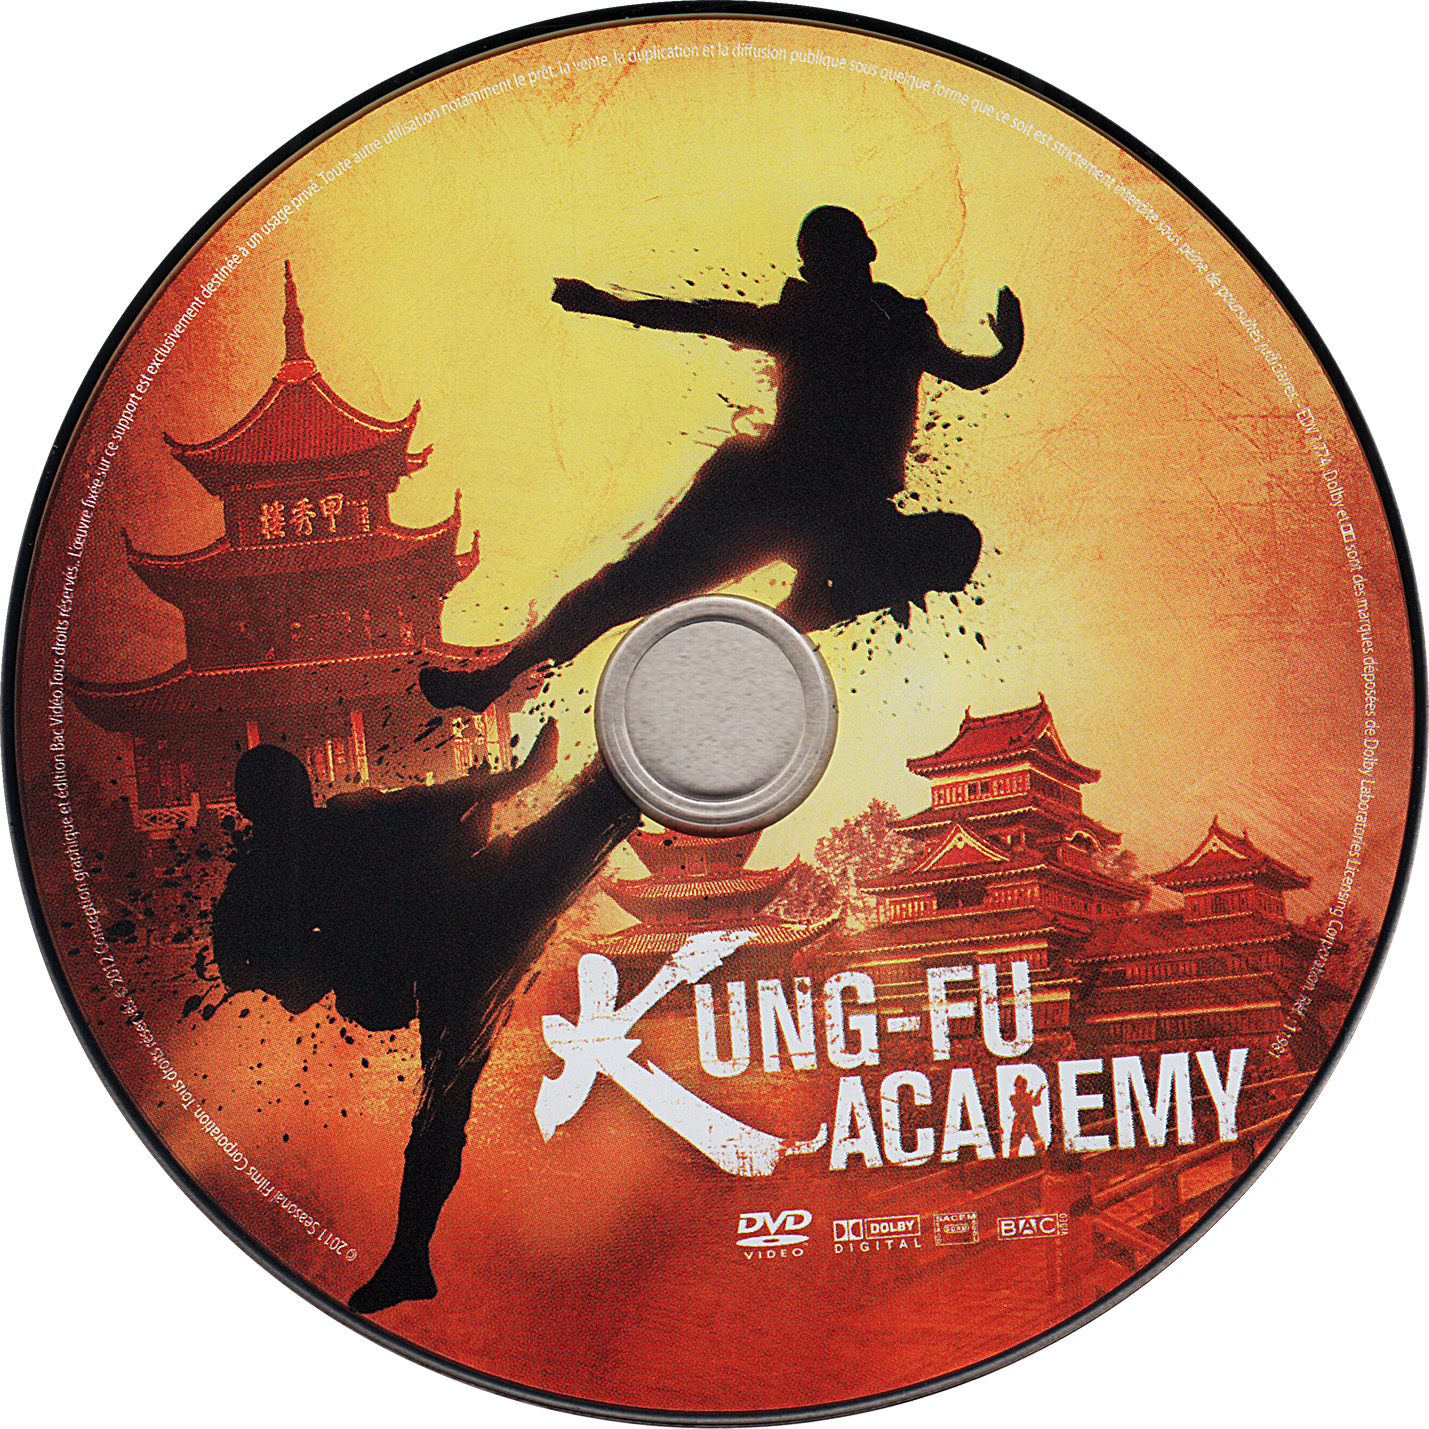 Kung-fu academy